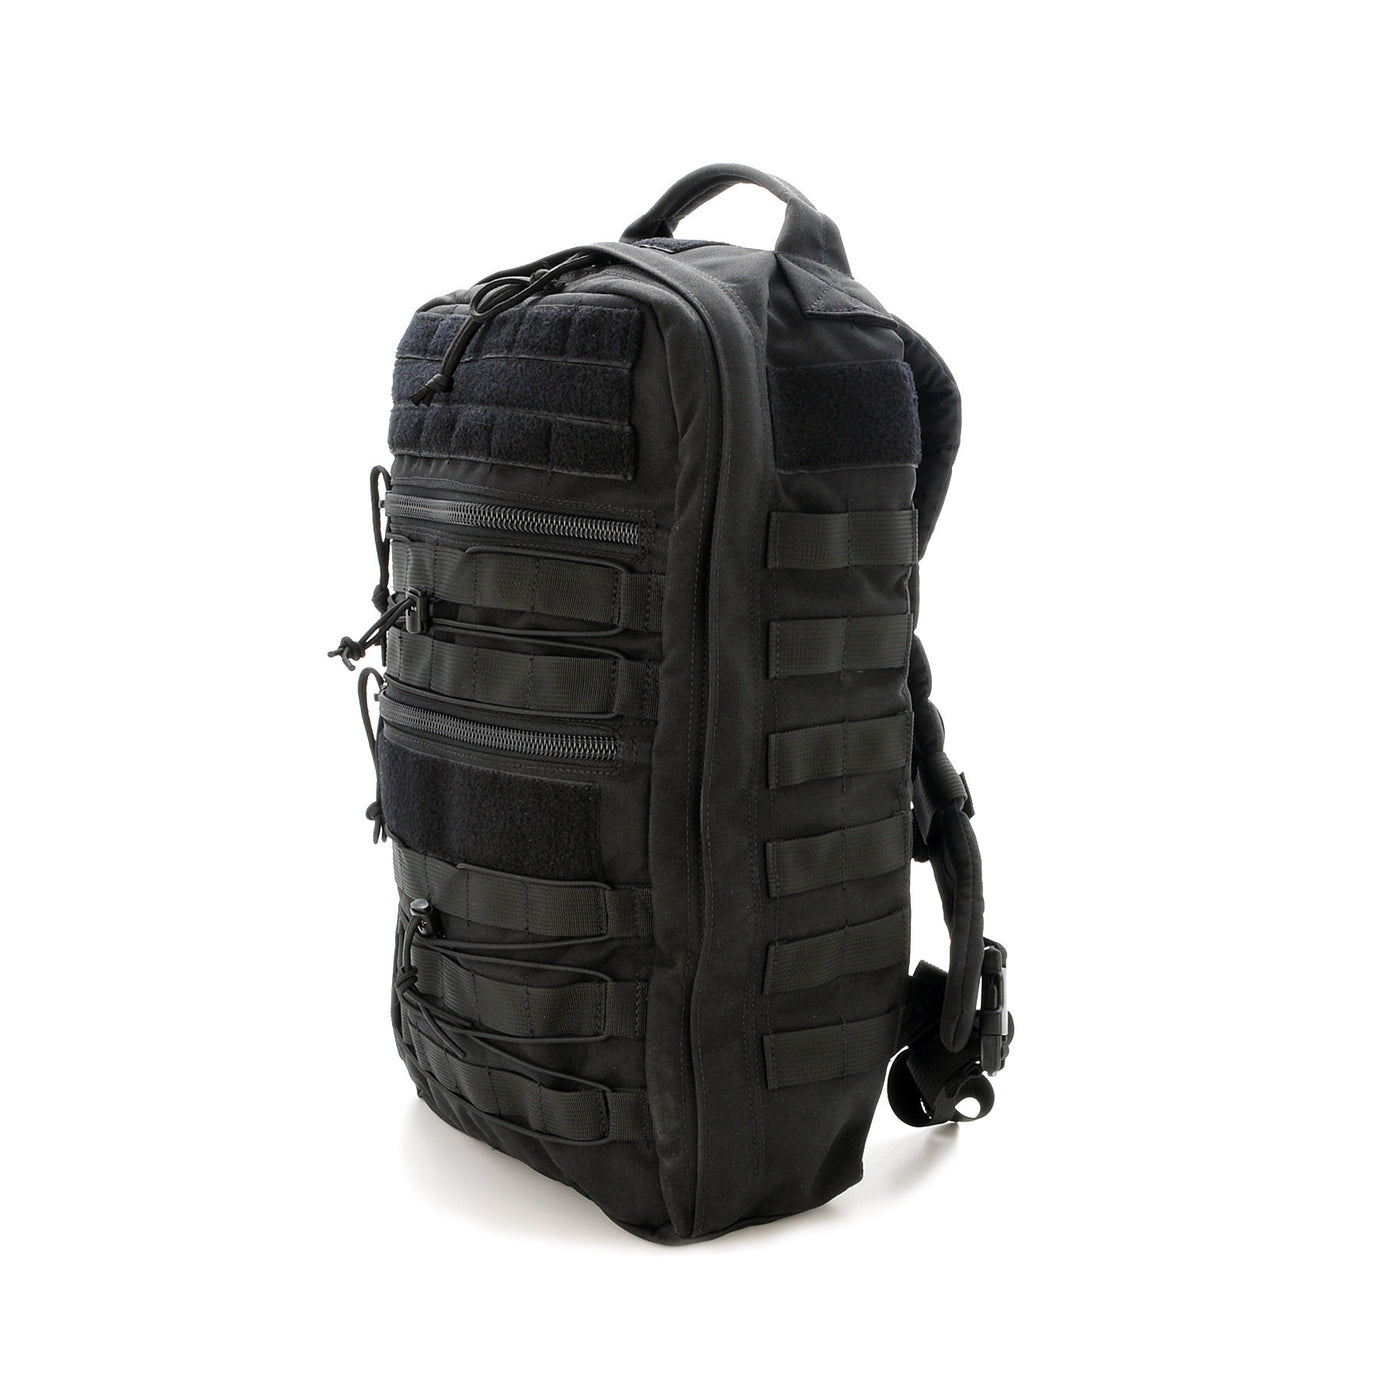 Tactical Backpack - Black – Maglite